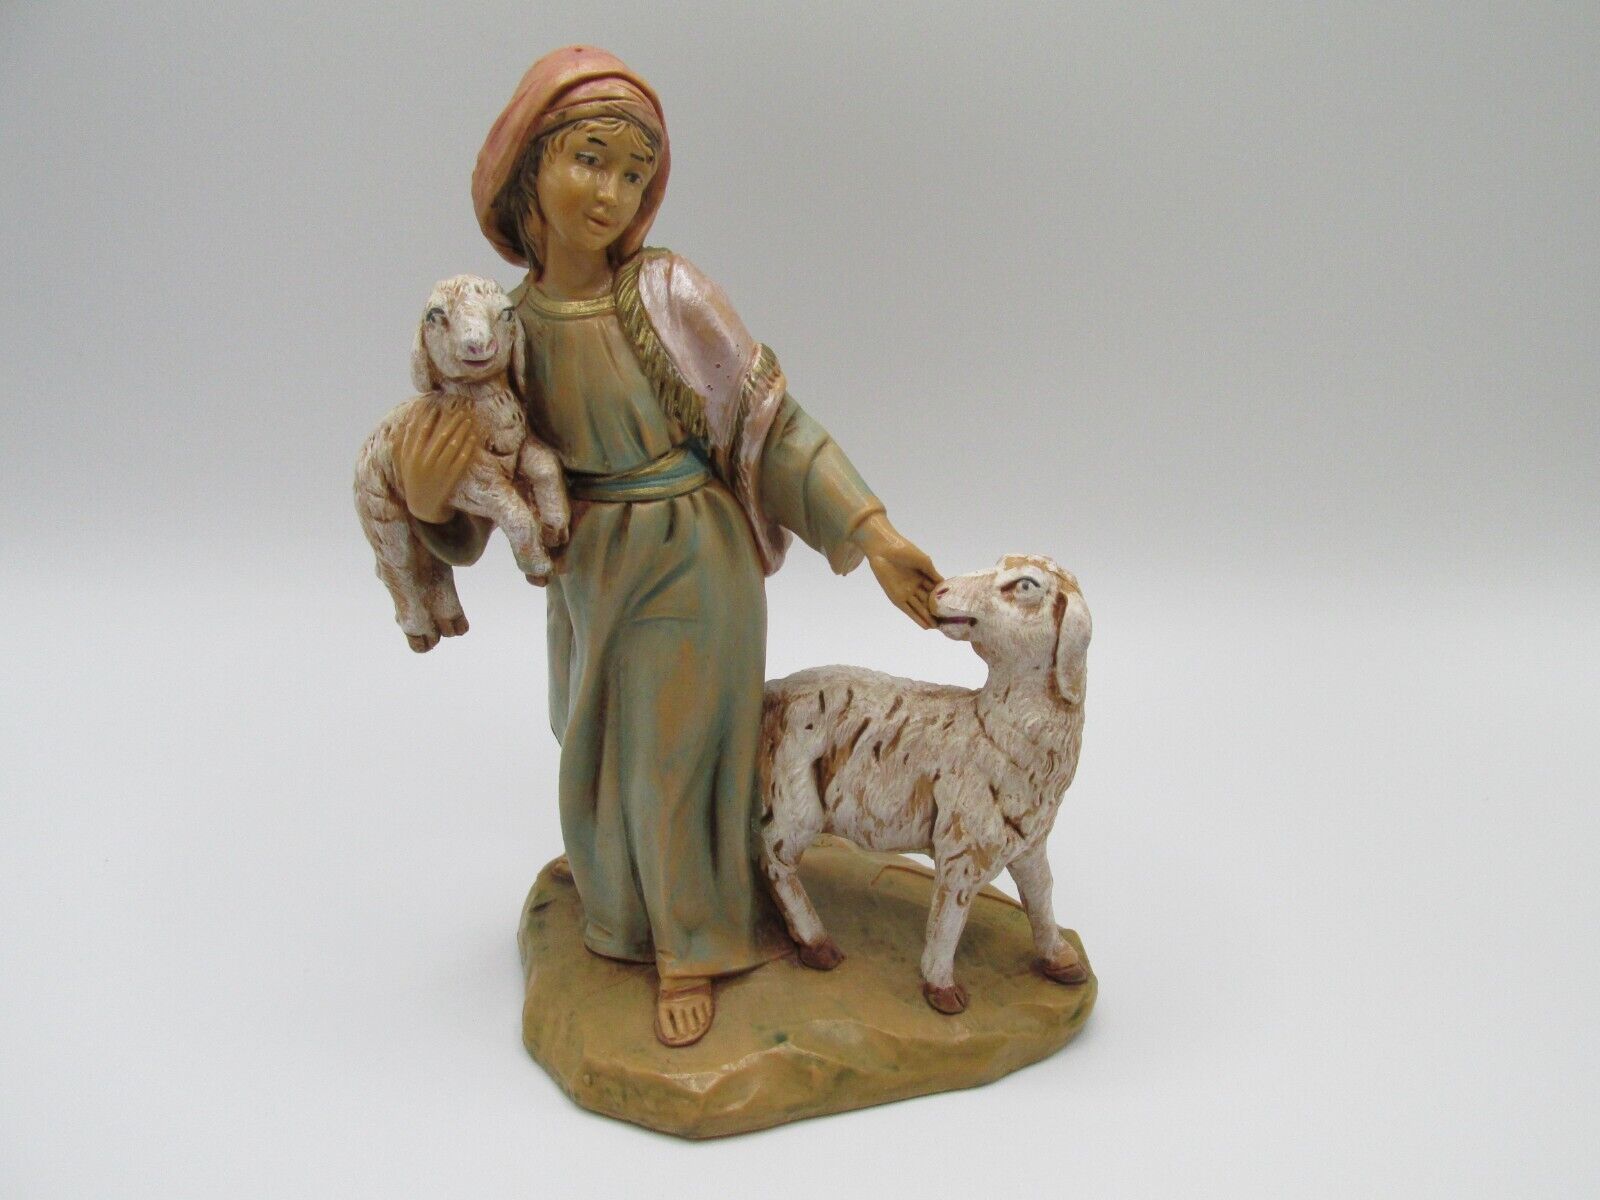 SIGNED NUMBERED Fontanini Nativity Figure RHODA SHEPHERDESS Italy # 242 2003